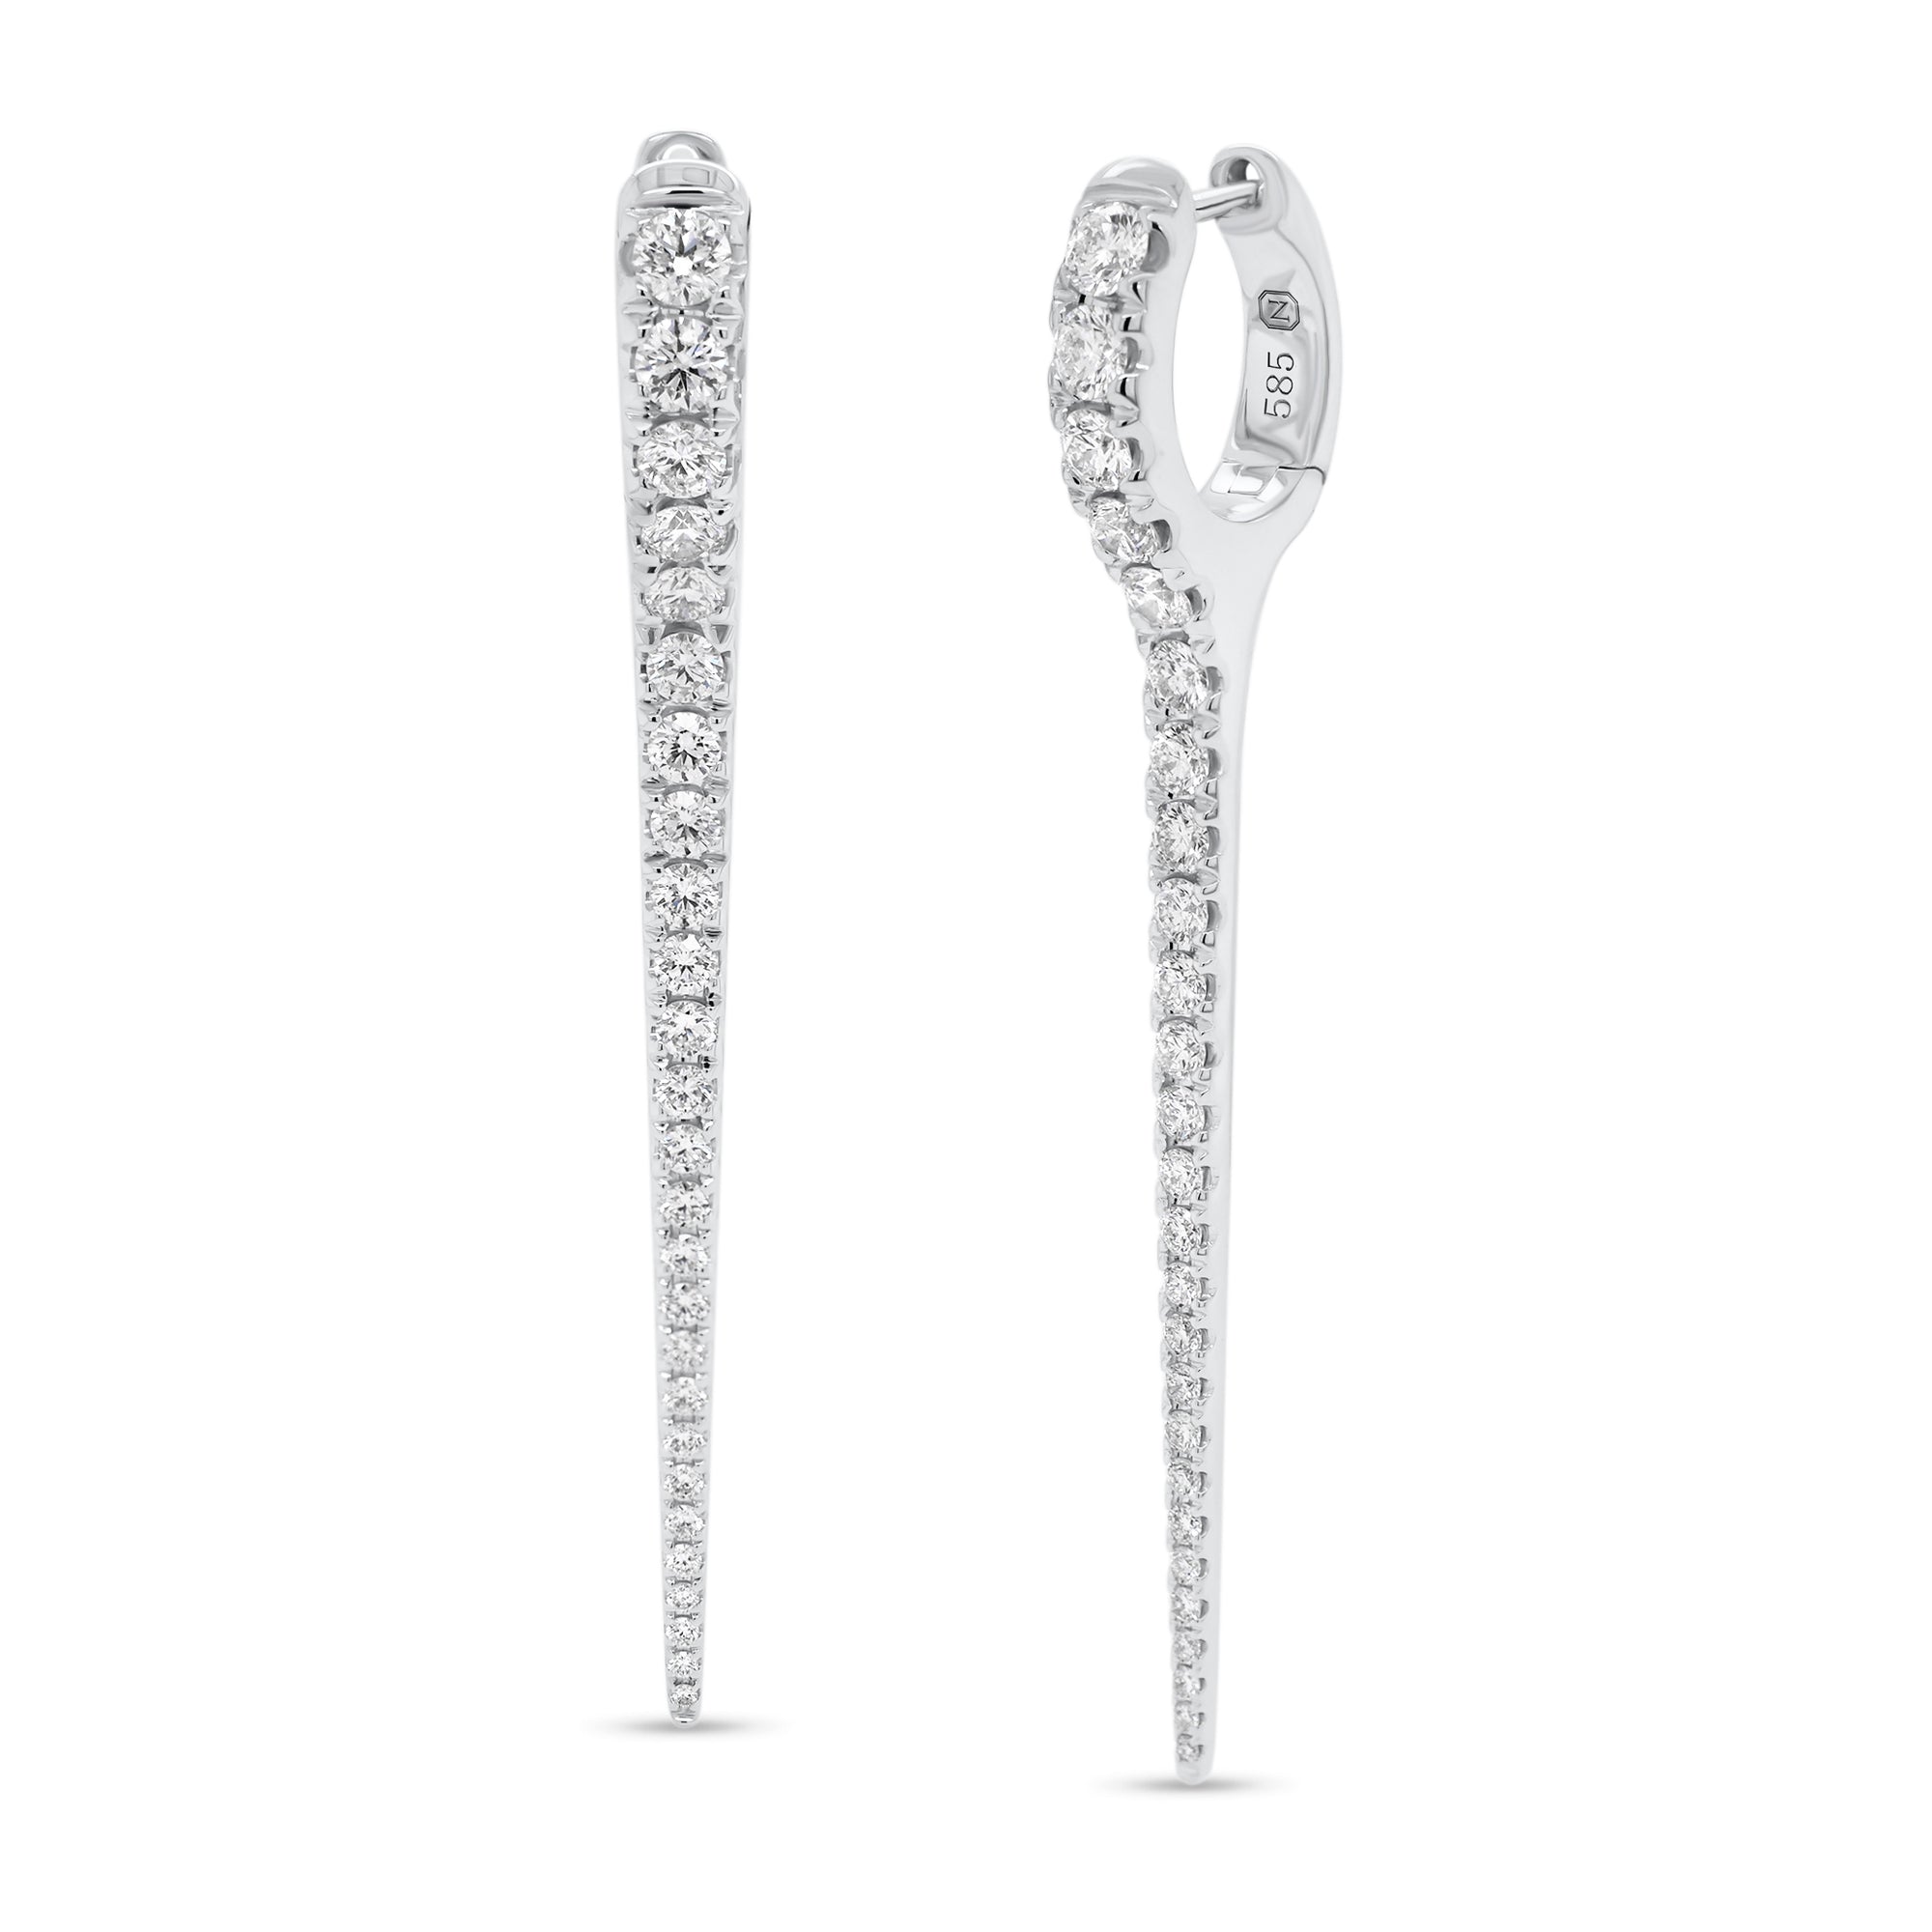 Diamond Dagger Earrings  - 14K gold weighing 7.90 grams  - 52 round diamonds totaling 1.64 carats